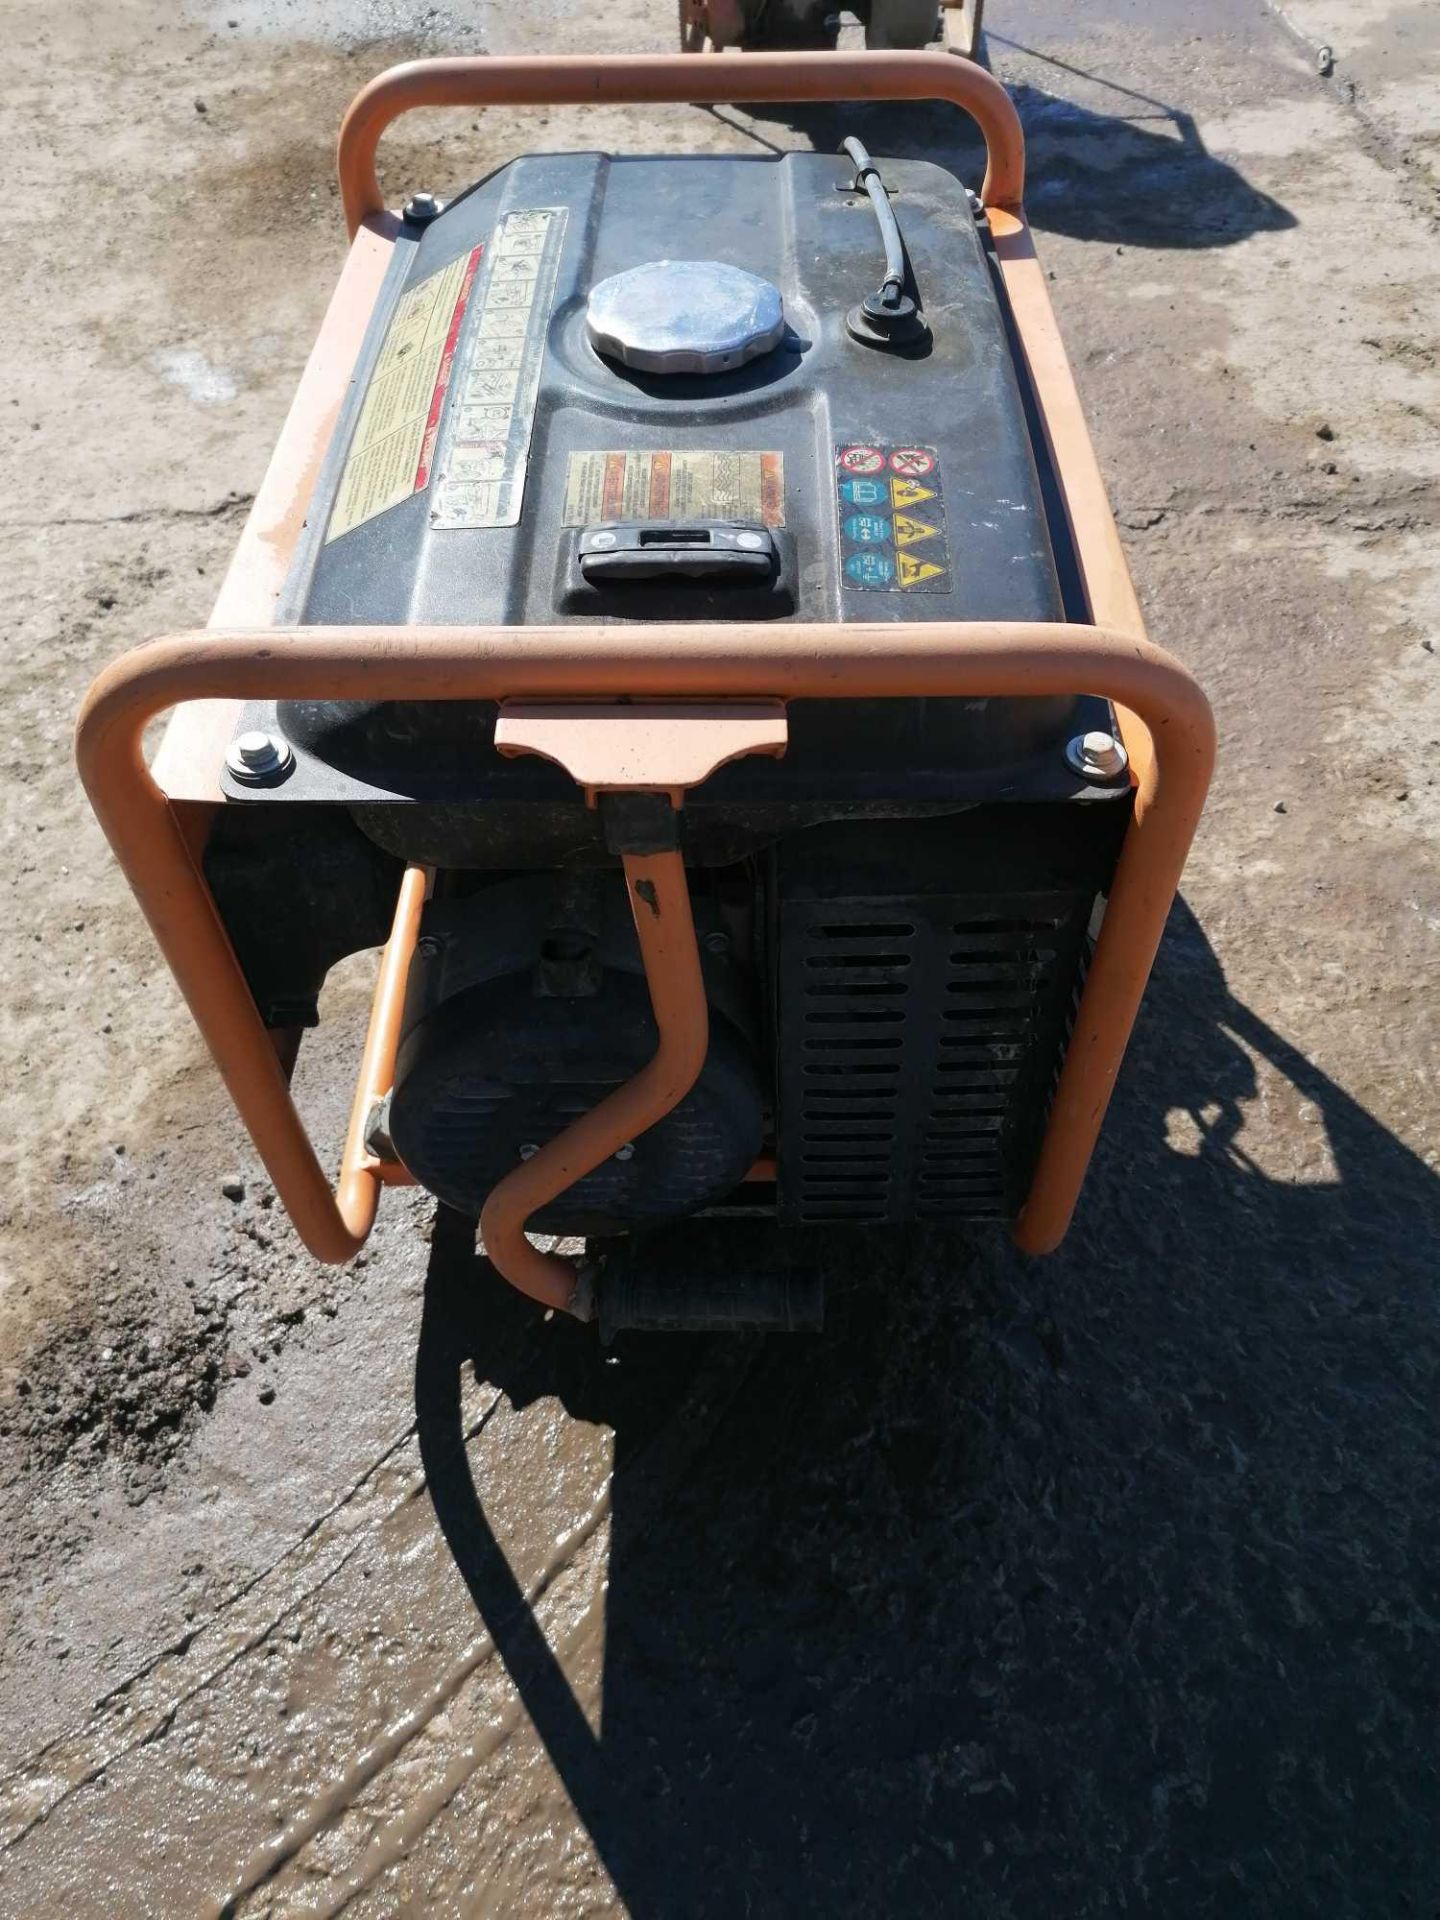 GENERAC WheelHouse GP3250 Generator, Model 095821, Serial #9923395B. Located in Naperville, IL. - Image 7 of 7